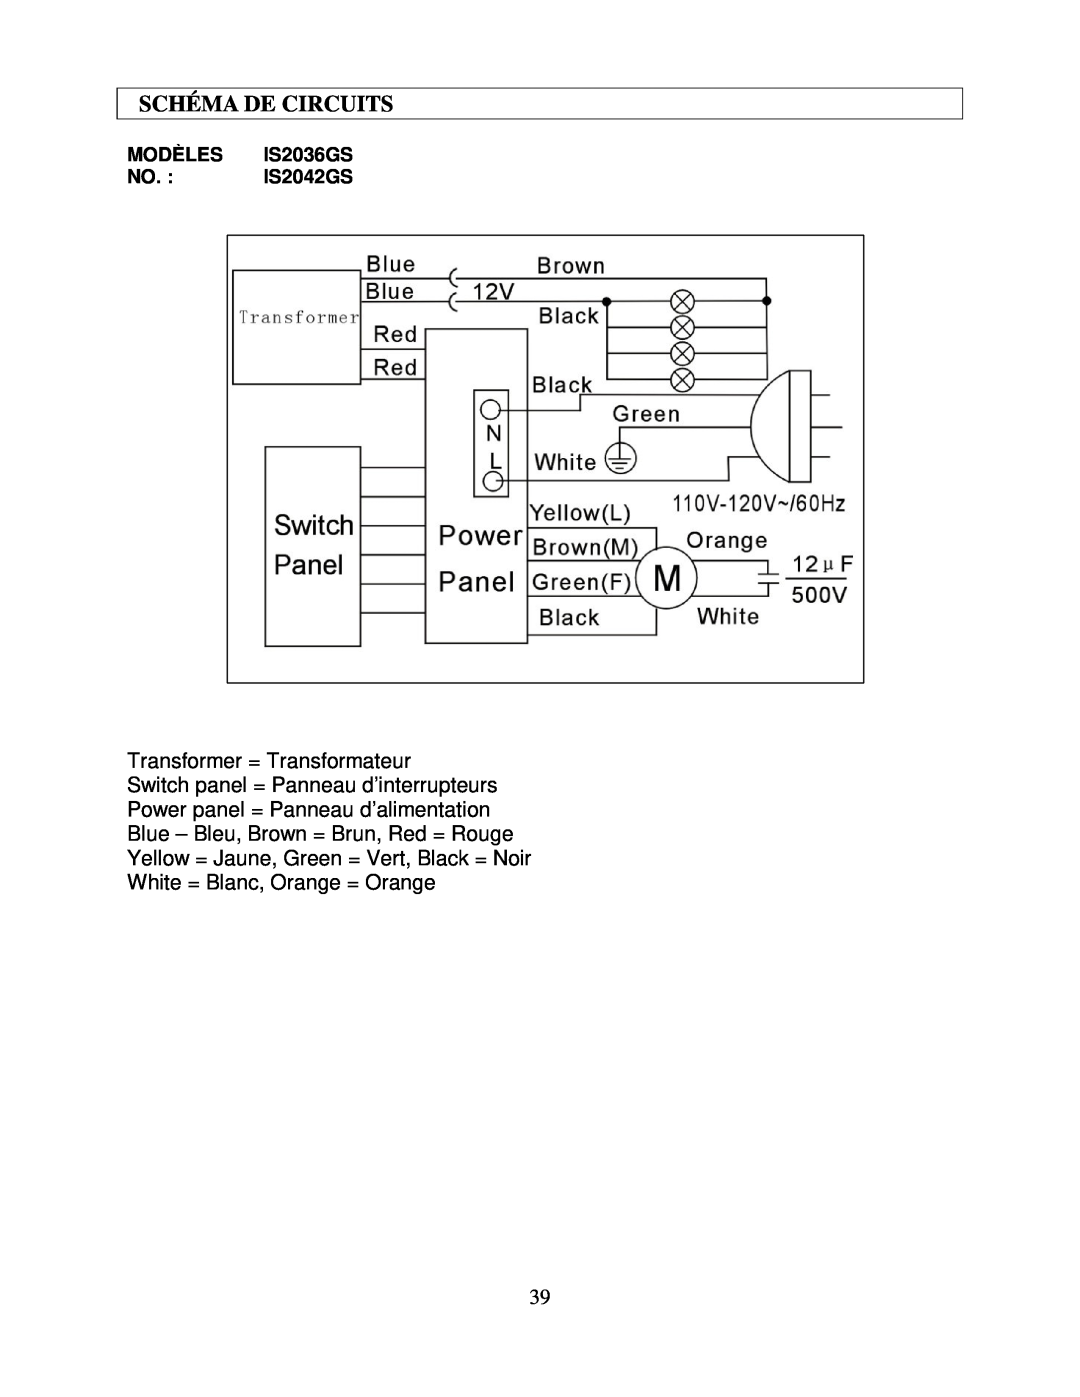 Kobe Range Hoods manual Schéma De Circuits, Transformer = Transformateur, MODÈLES IS2036GS NO. IS2042GS 